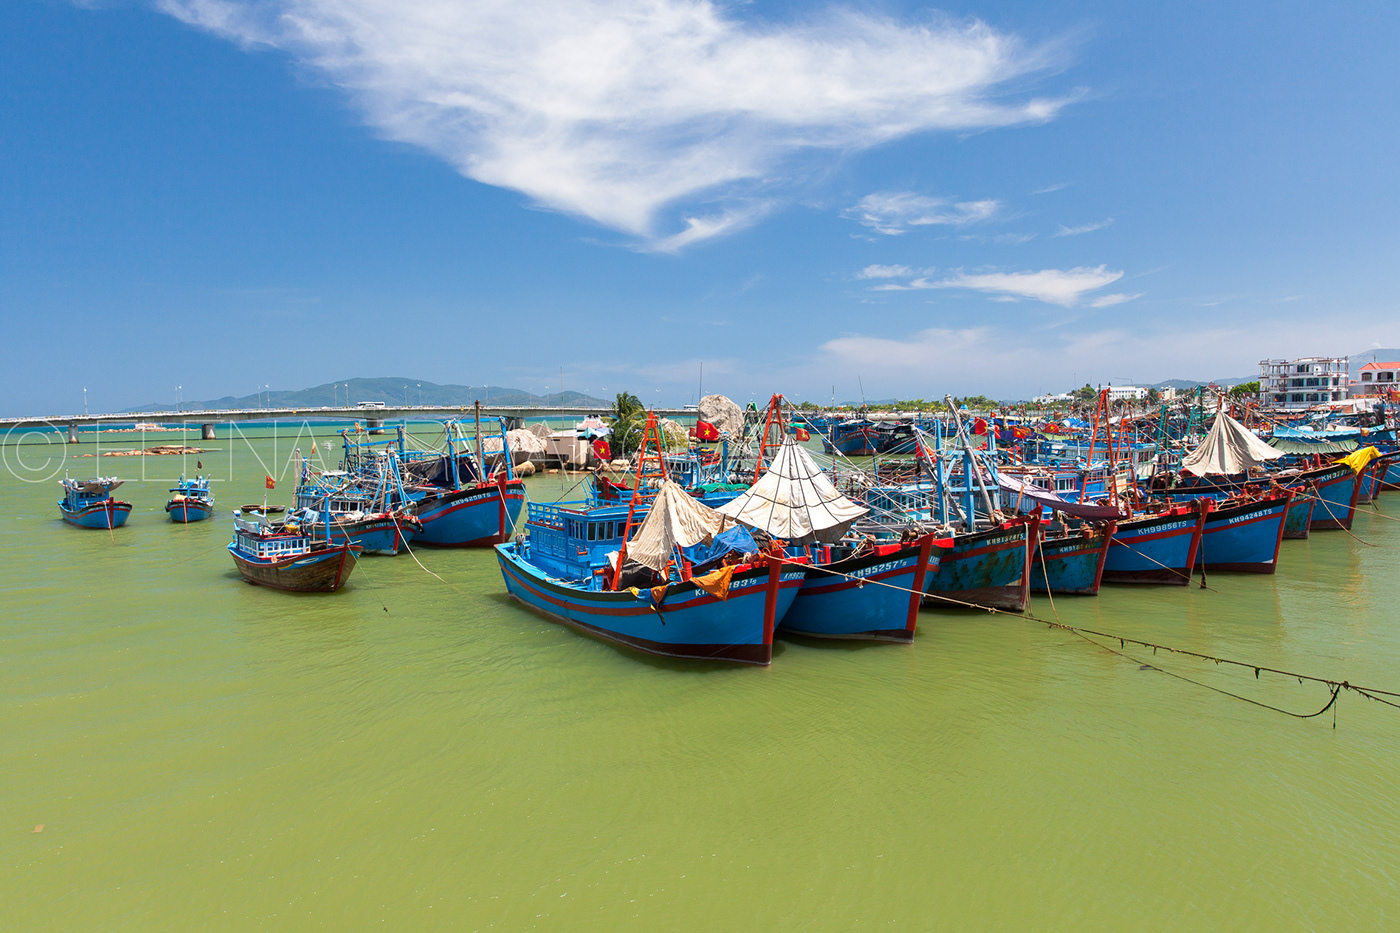 Fishing boats in the port near Nha Trang city, Vietnam